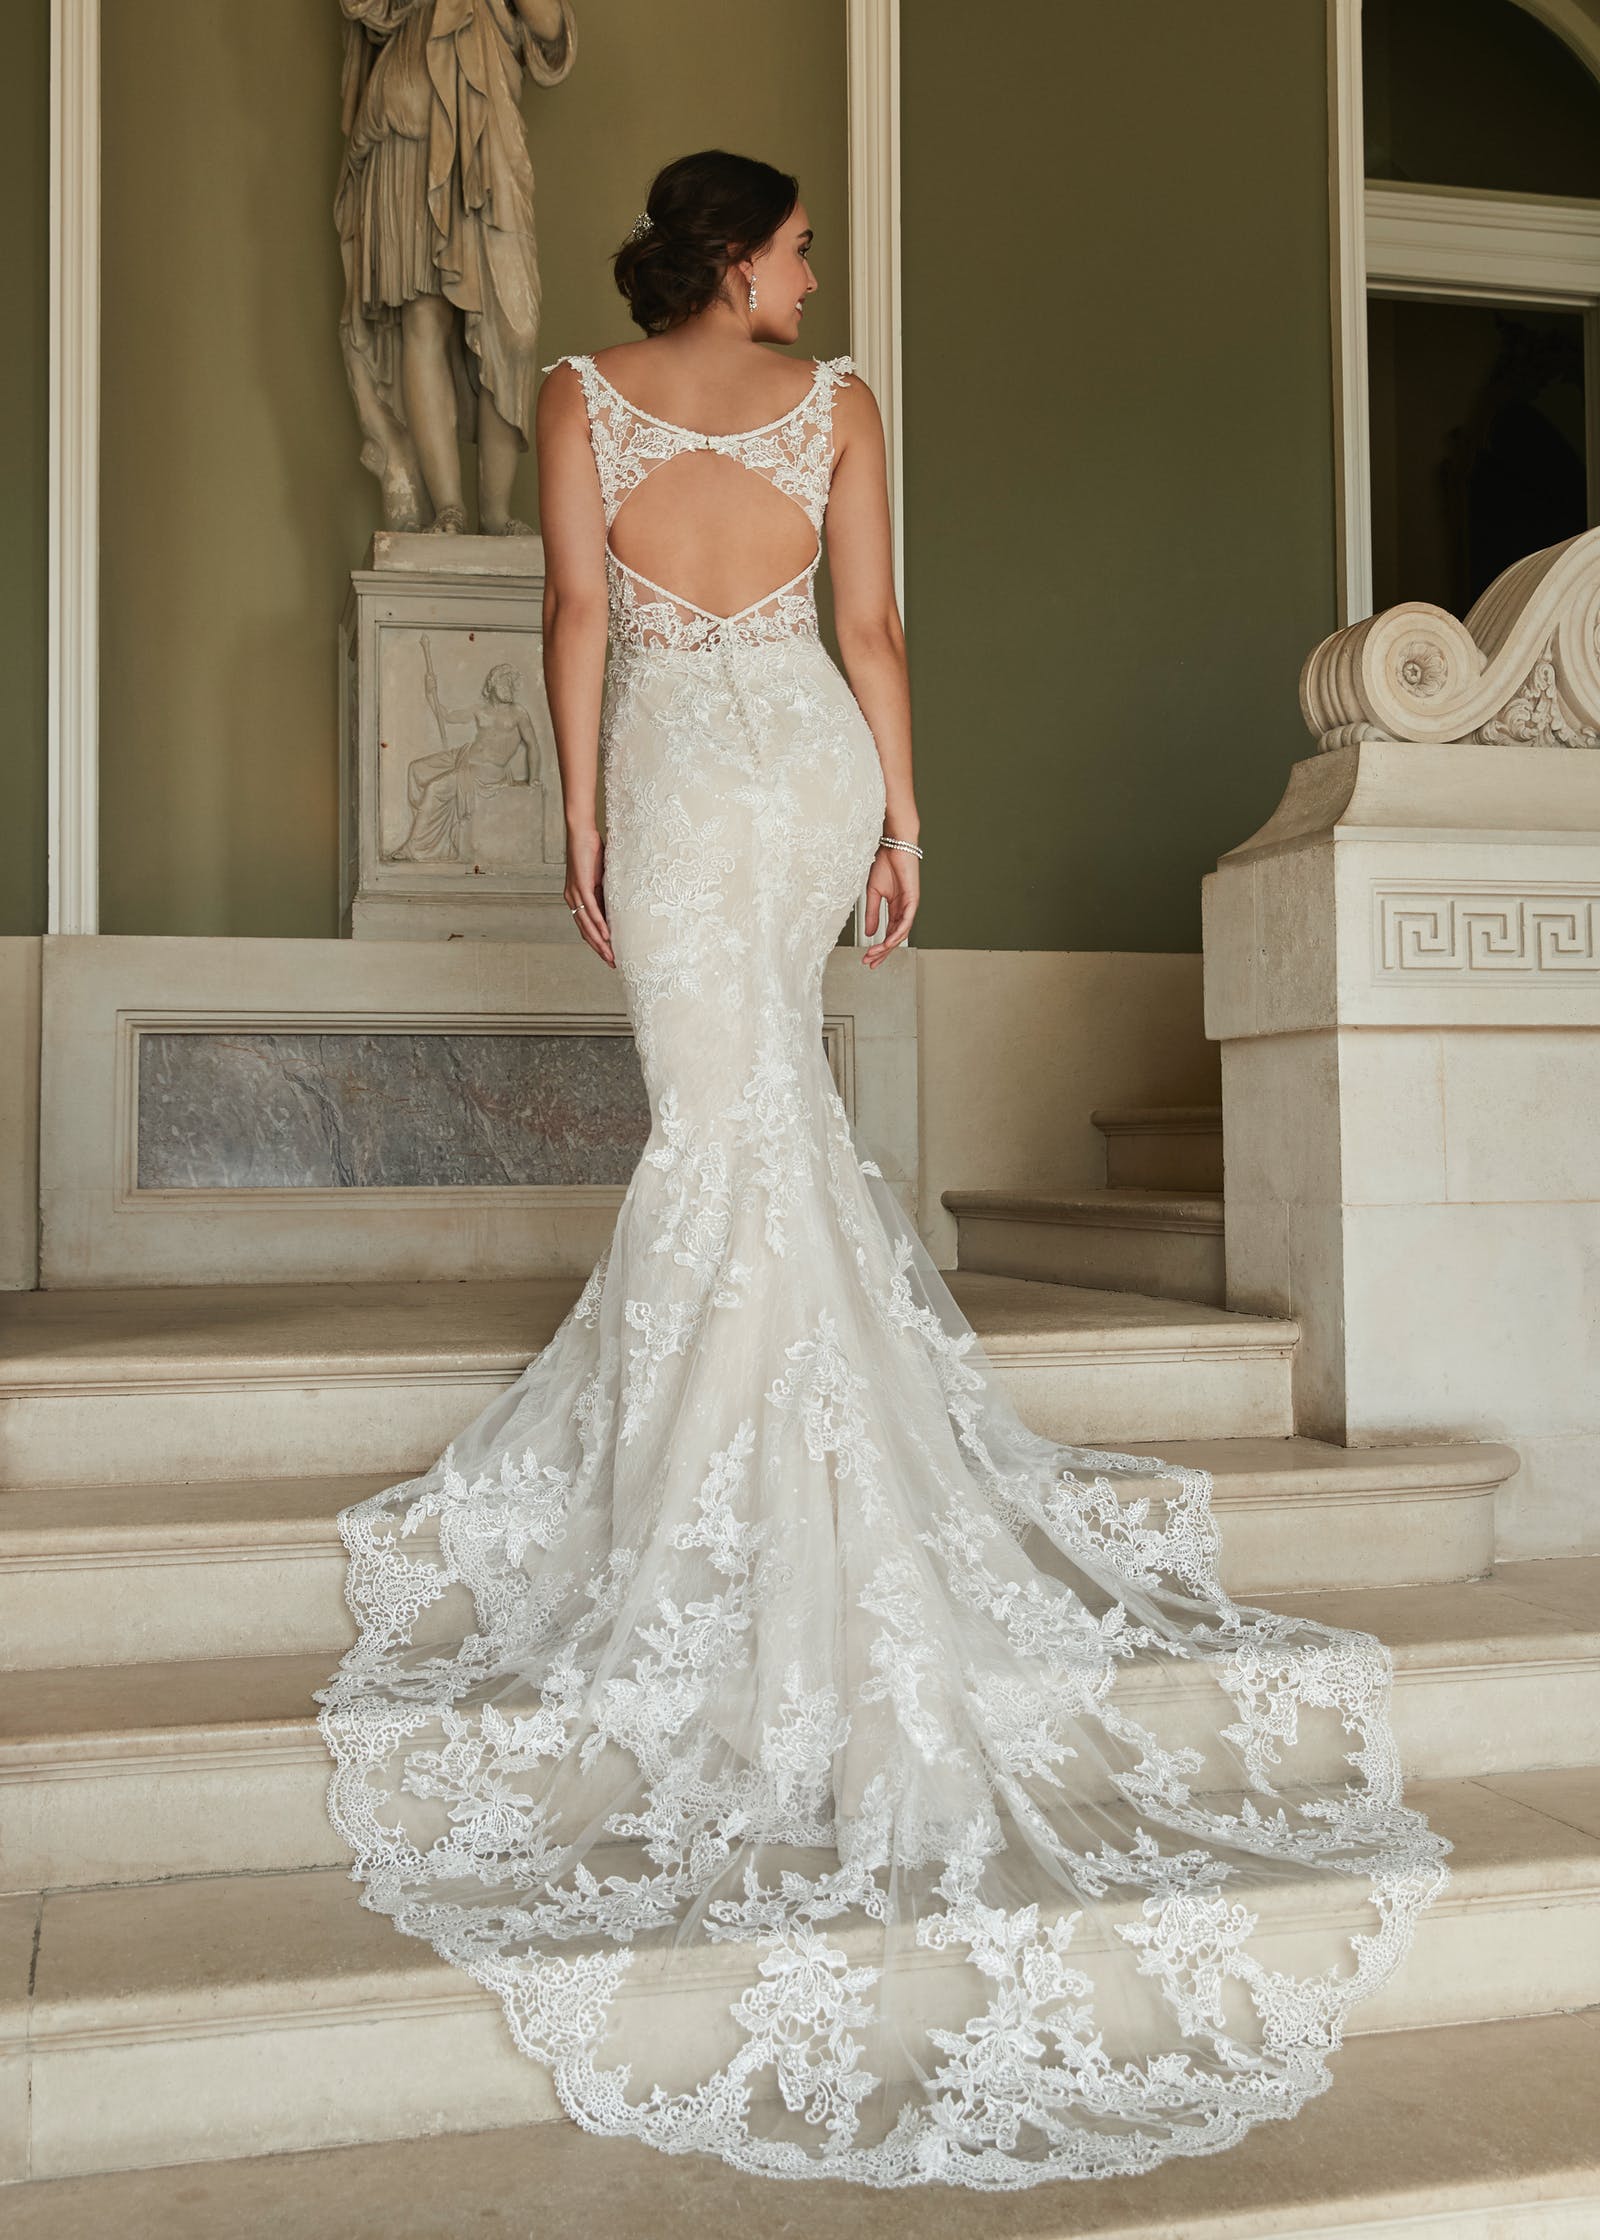 Tiffany wedding dress by Romantica